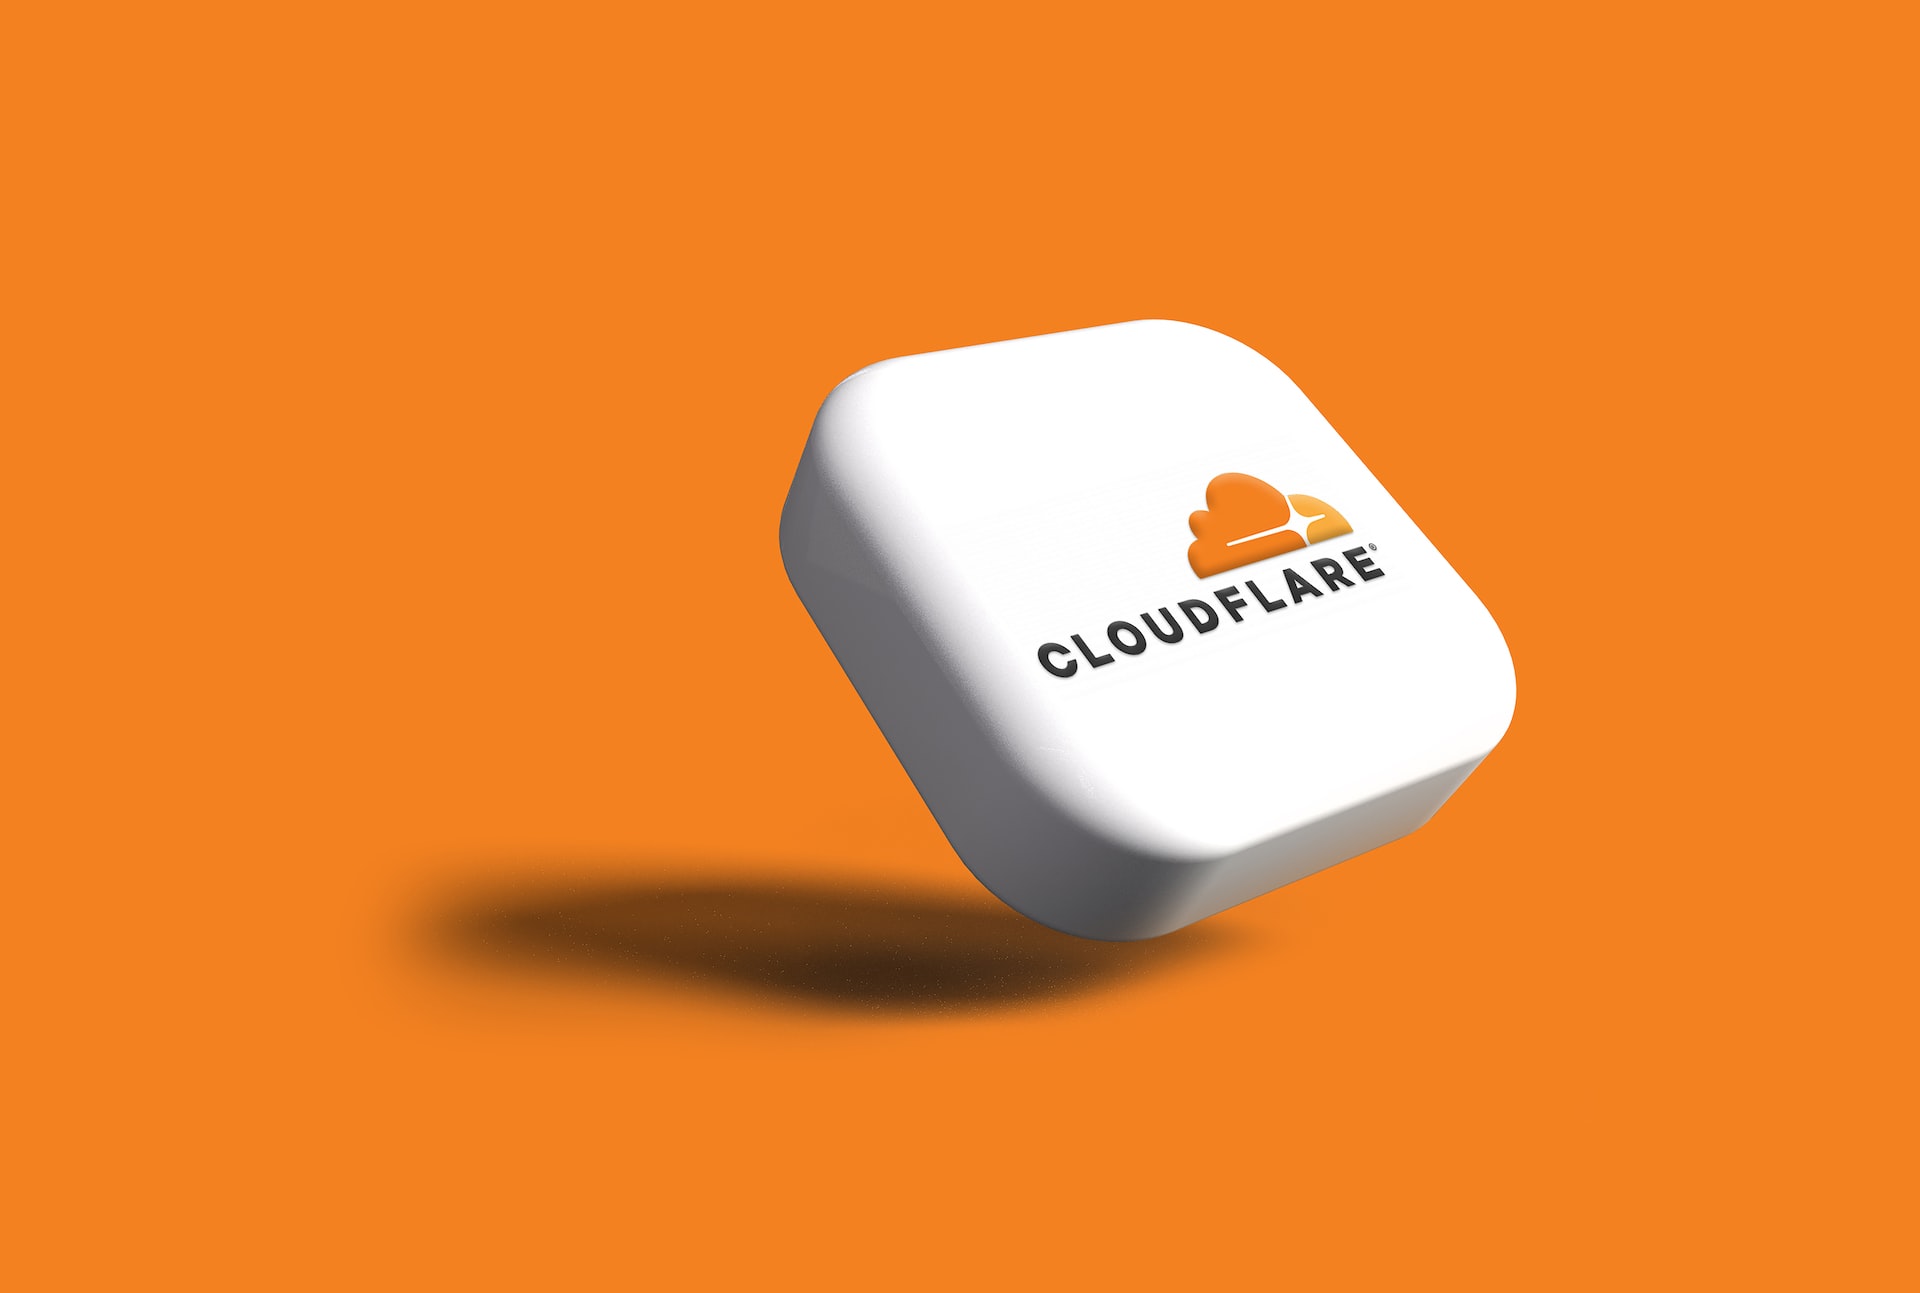 Cloudflare stock, NET stock